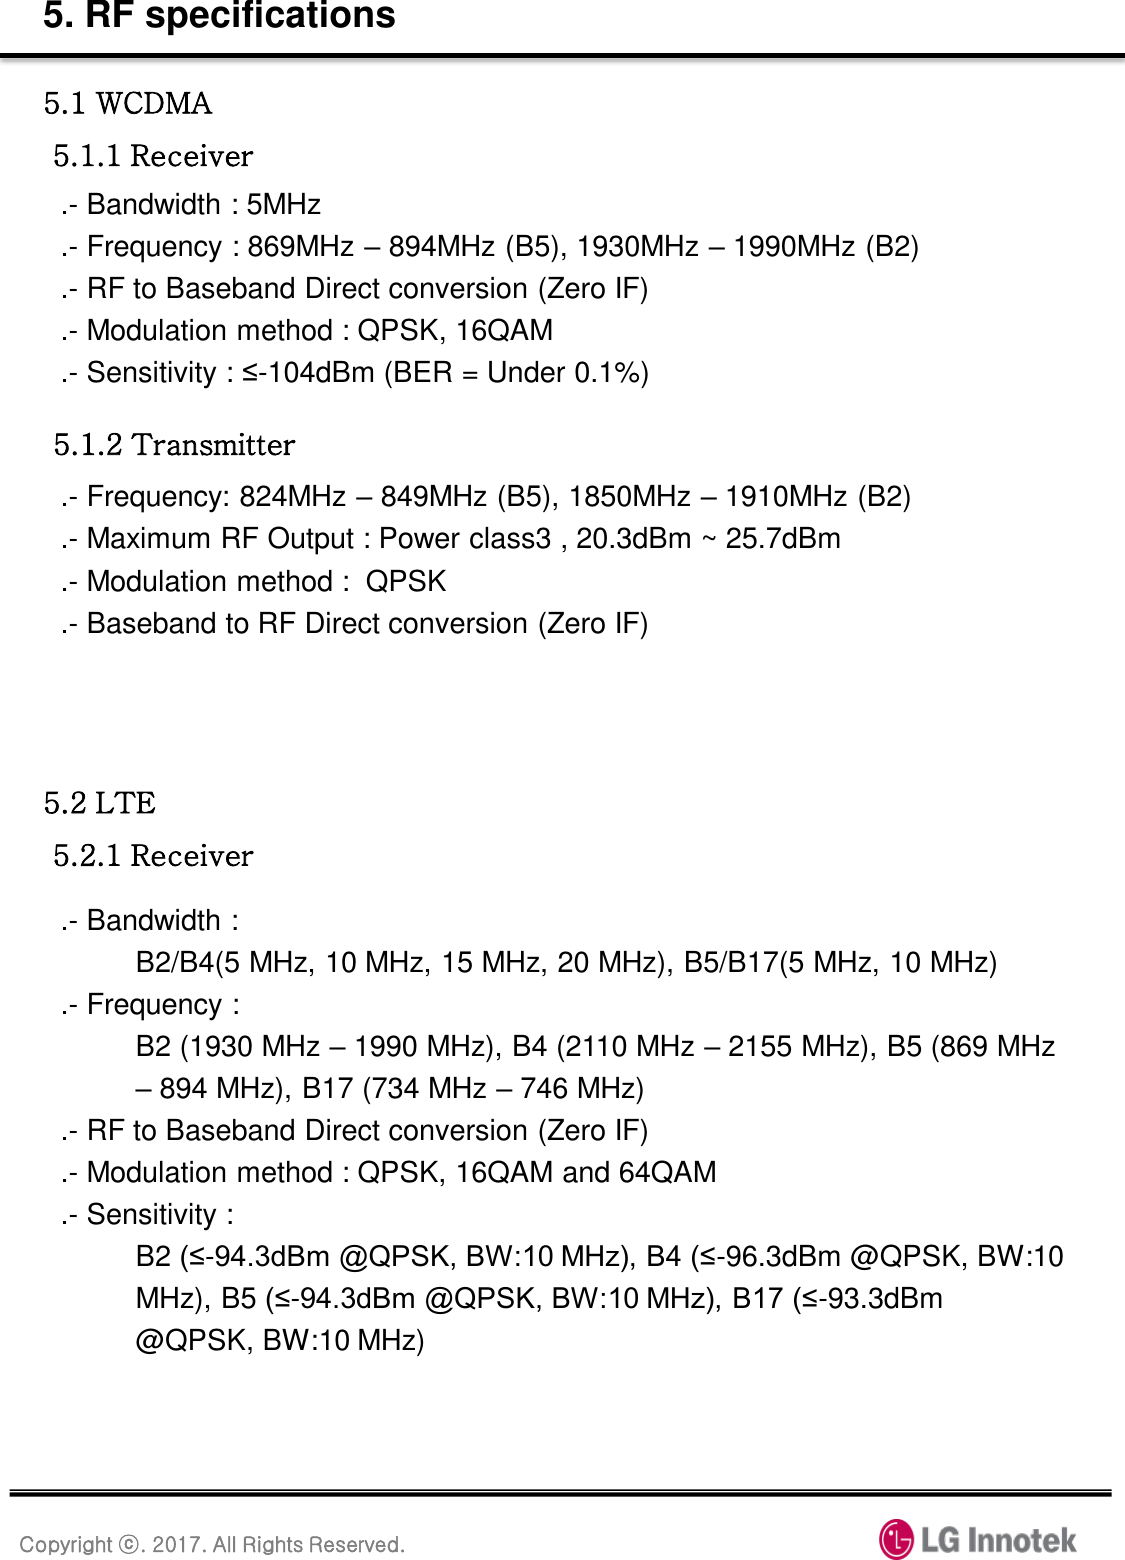 Copyright ⓒ. 2017. All Rights Reserved. 5. RF specifications 5.1 WCDMA  5.1.1 Receiver .- Bandwidth : 5MHz .- Frequency : 869MHz – 894MHz (B5), 1930MHz – 1990MHz (B2) .- RF to Baseband Direct conversion (Zero IF) .- Modulation method : QPSK, 16QAM .- Sensitivity : ≤-104dBm (BER = Under 0.1%) 5.1.2 Transmitter .- Frequency: 824MHz – 849MHz (B5), 1850MHz – 1910MHz (B2) .- Maximum RF Output : Power class3 , 20.3dBm ~ 25.7dBm                                    .- Modulation method :  QPSK .- Baseband to RF Direct conversion (Zero IF) 5.2 LTE  5.2.1 Receiver .- Bandwidth :  B2/B4(5 MHz, 10 MHz, 15 MHz, 20 MHz), B5/B17(5 MHz, 10 MHz) .- Frequency :  B2 (1930 MHz – 1990 MHz), B4 (2110 MHz – 2155 MHz), B5 (869 MHz – 894 MHz), B17 (734 MHz – 746 MHz) .- RF to Baseband Direct conversion (Zero IF) .- Modulation method : QPSK, 16QAM and 64QAM .- Sensitivity :  B2 (≤-94.3dBm @QPSK, BW:10 MHz), B4 (≤-96.3dBm @QPSK, BW:10 MHz), B5 (≤-94.3dBm @QPSK, BW:10 MHz), B17 (≤-93.3dBm @QPSK, BW:10 MHz) 